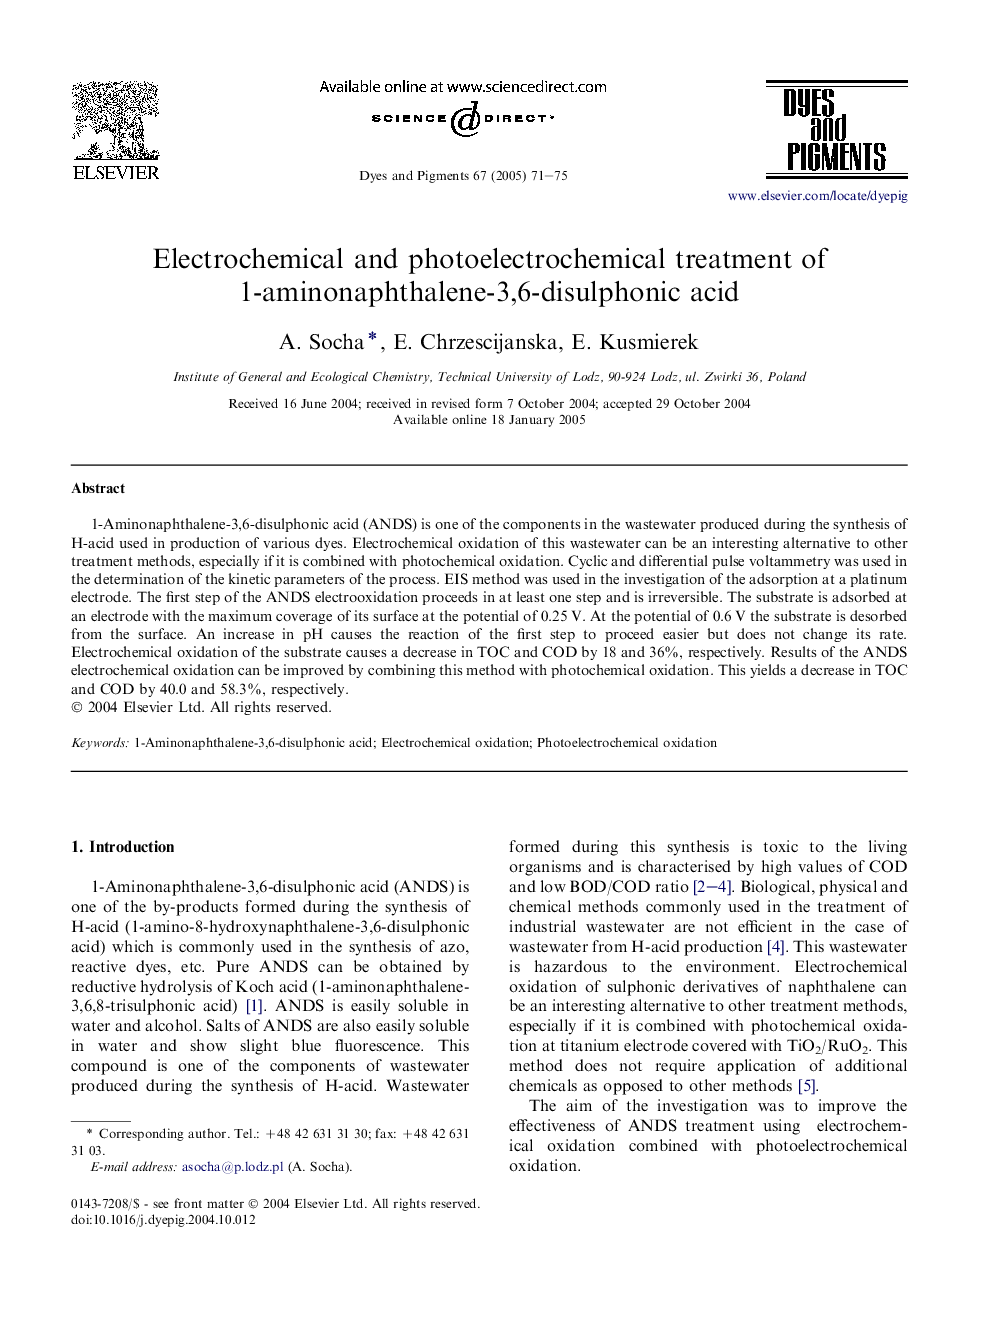 Electrochemical and photoelectrochemical treatment of 1-aminonaphthalene-3,6-disulphonic acid